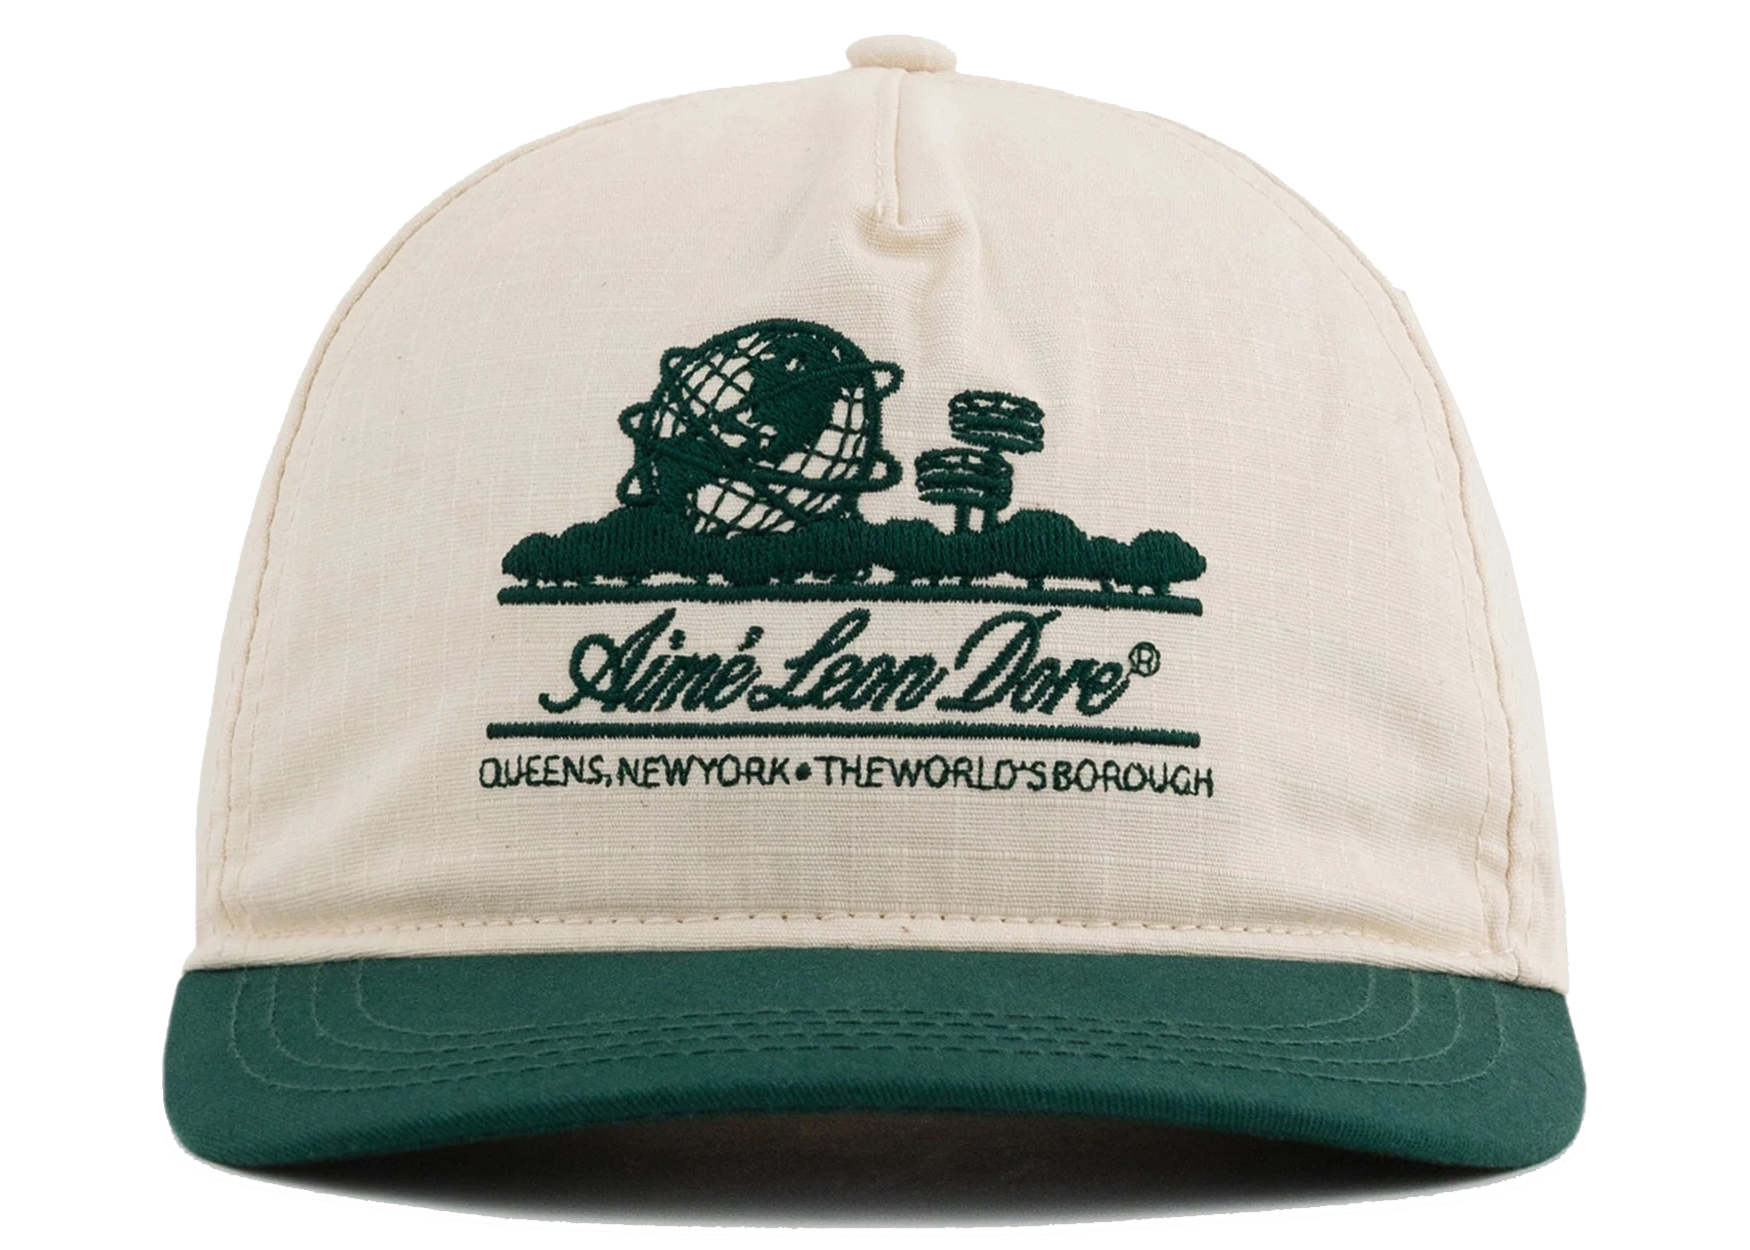 Aime Leon Dore Unisphere Hat Cream Men's - SS22 - US